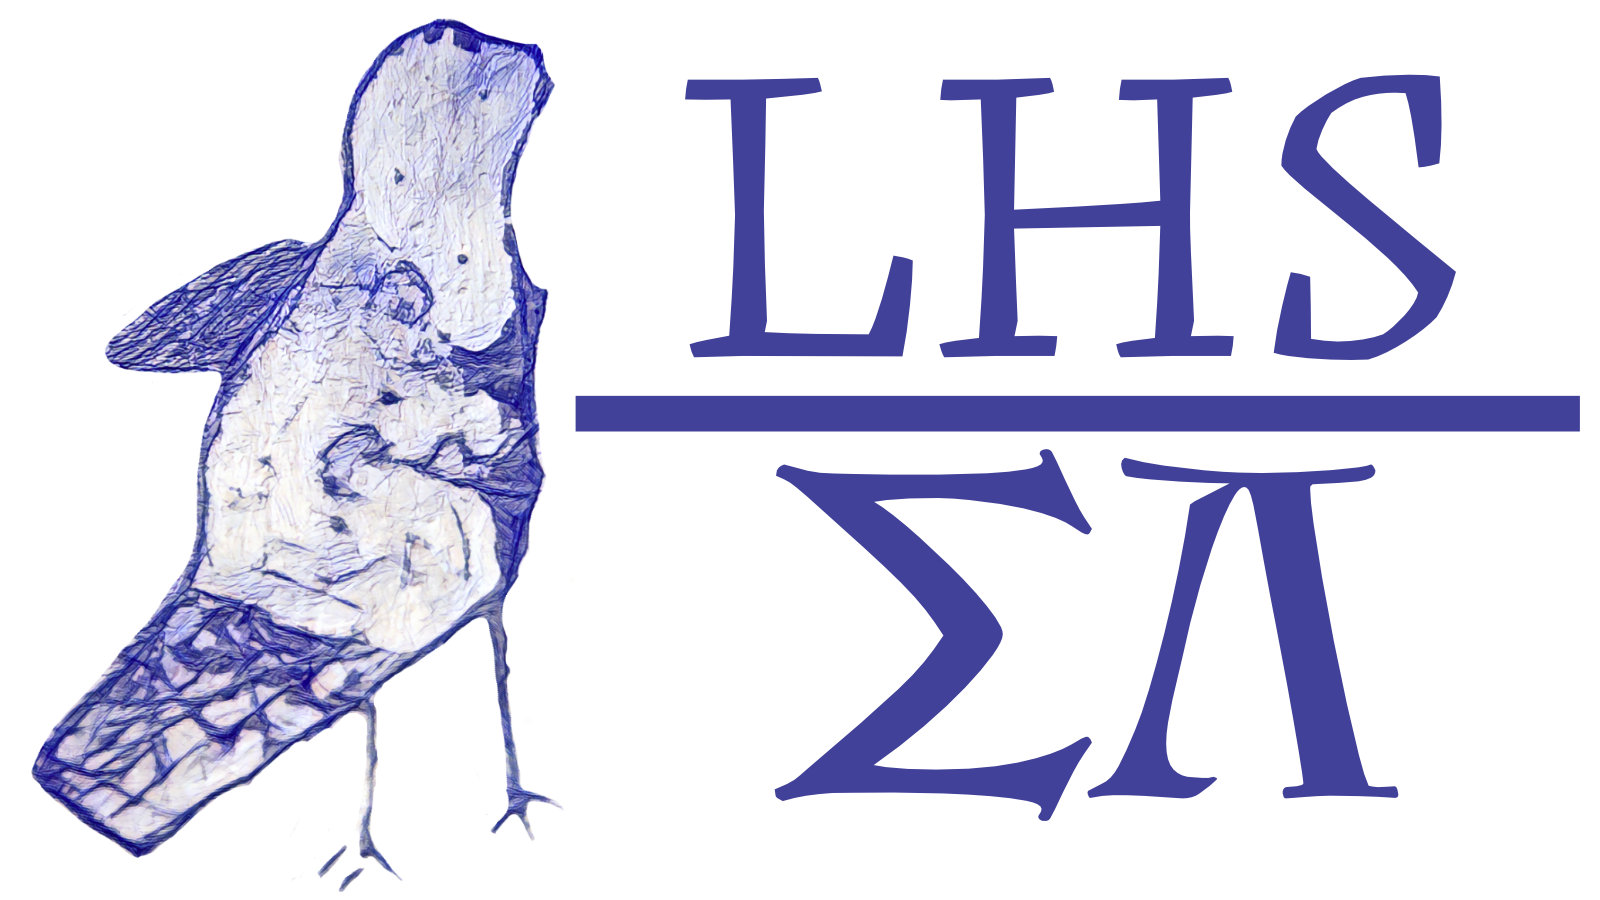 Logo for The Leros Humanism Seminars